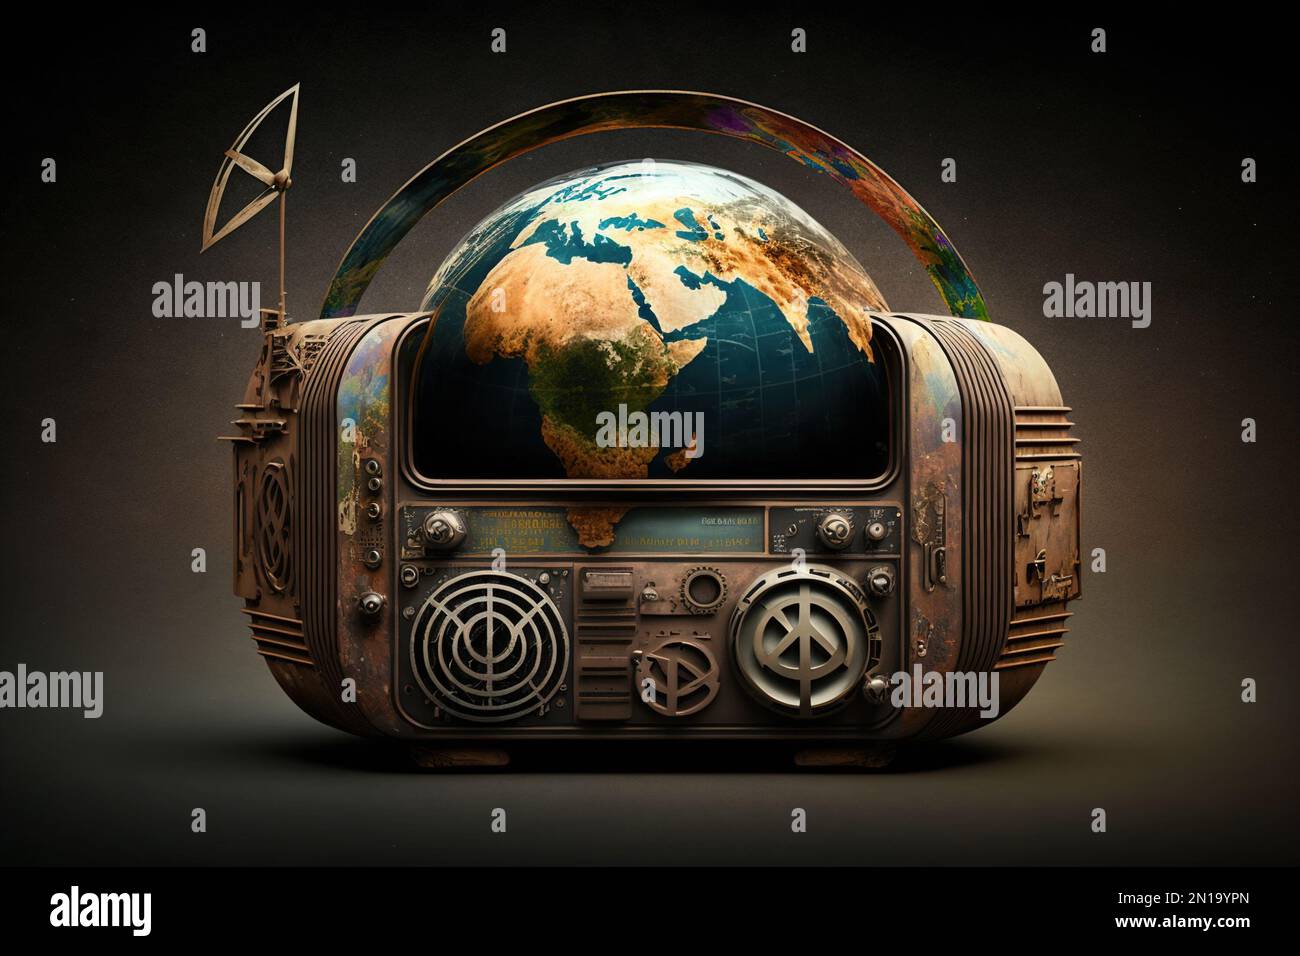 Vintage radio with planet earth. World radio day theme concept Stock Photo  - Alamy